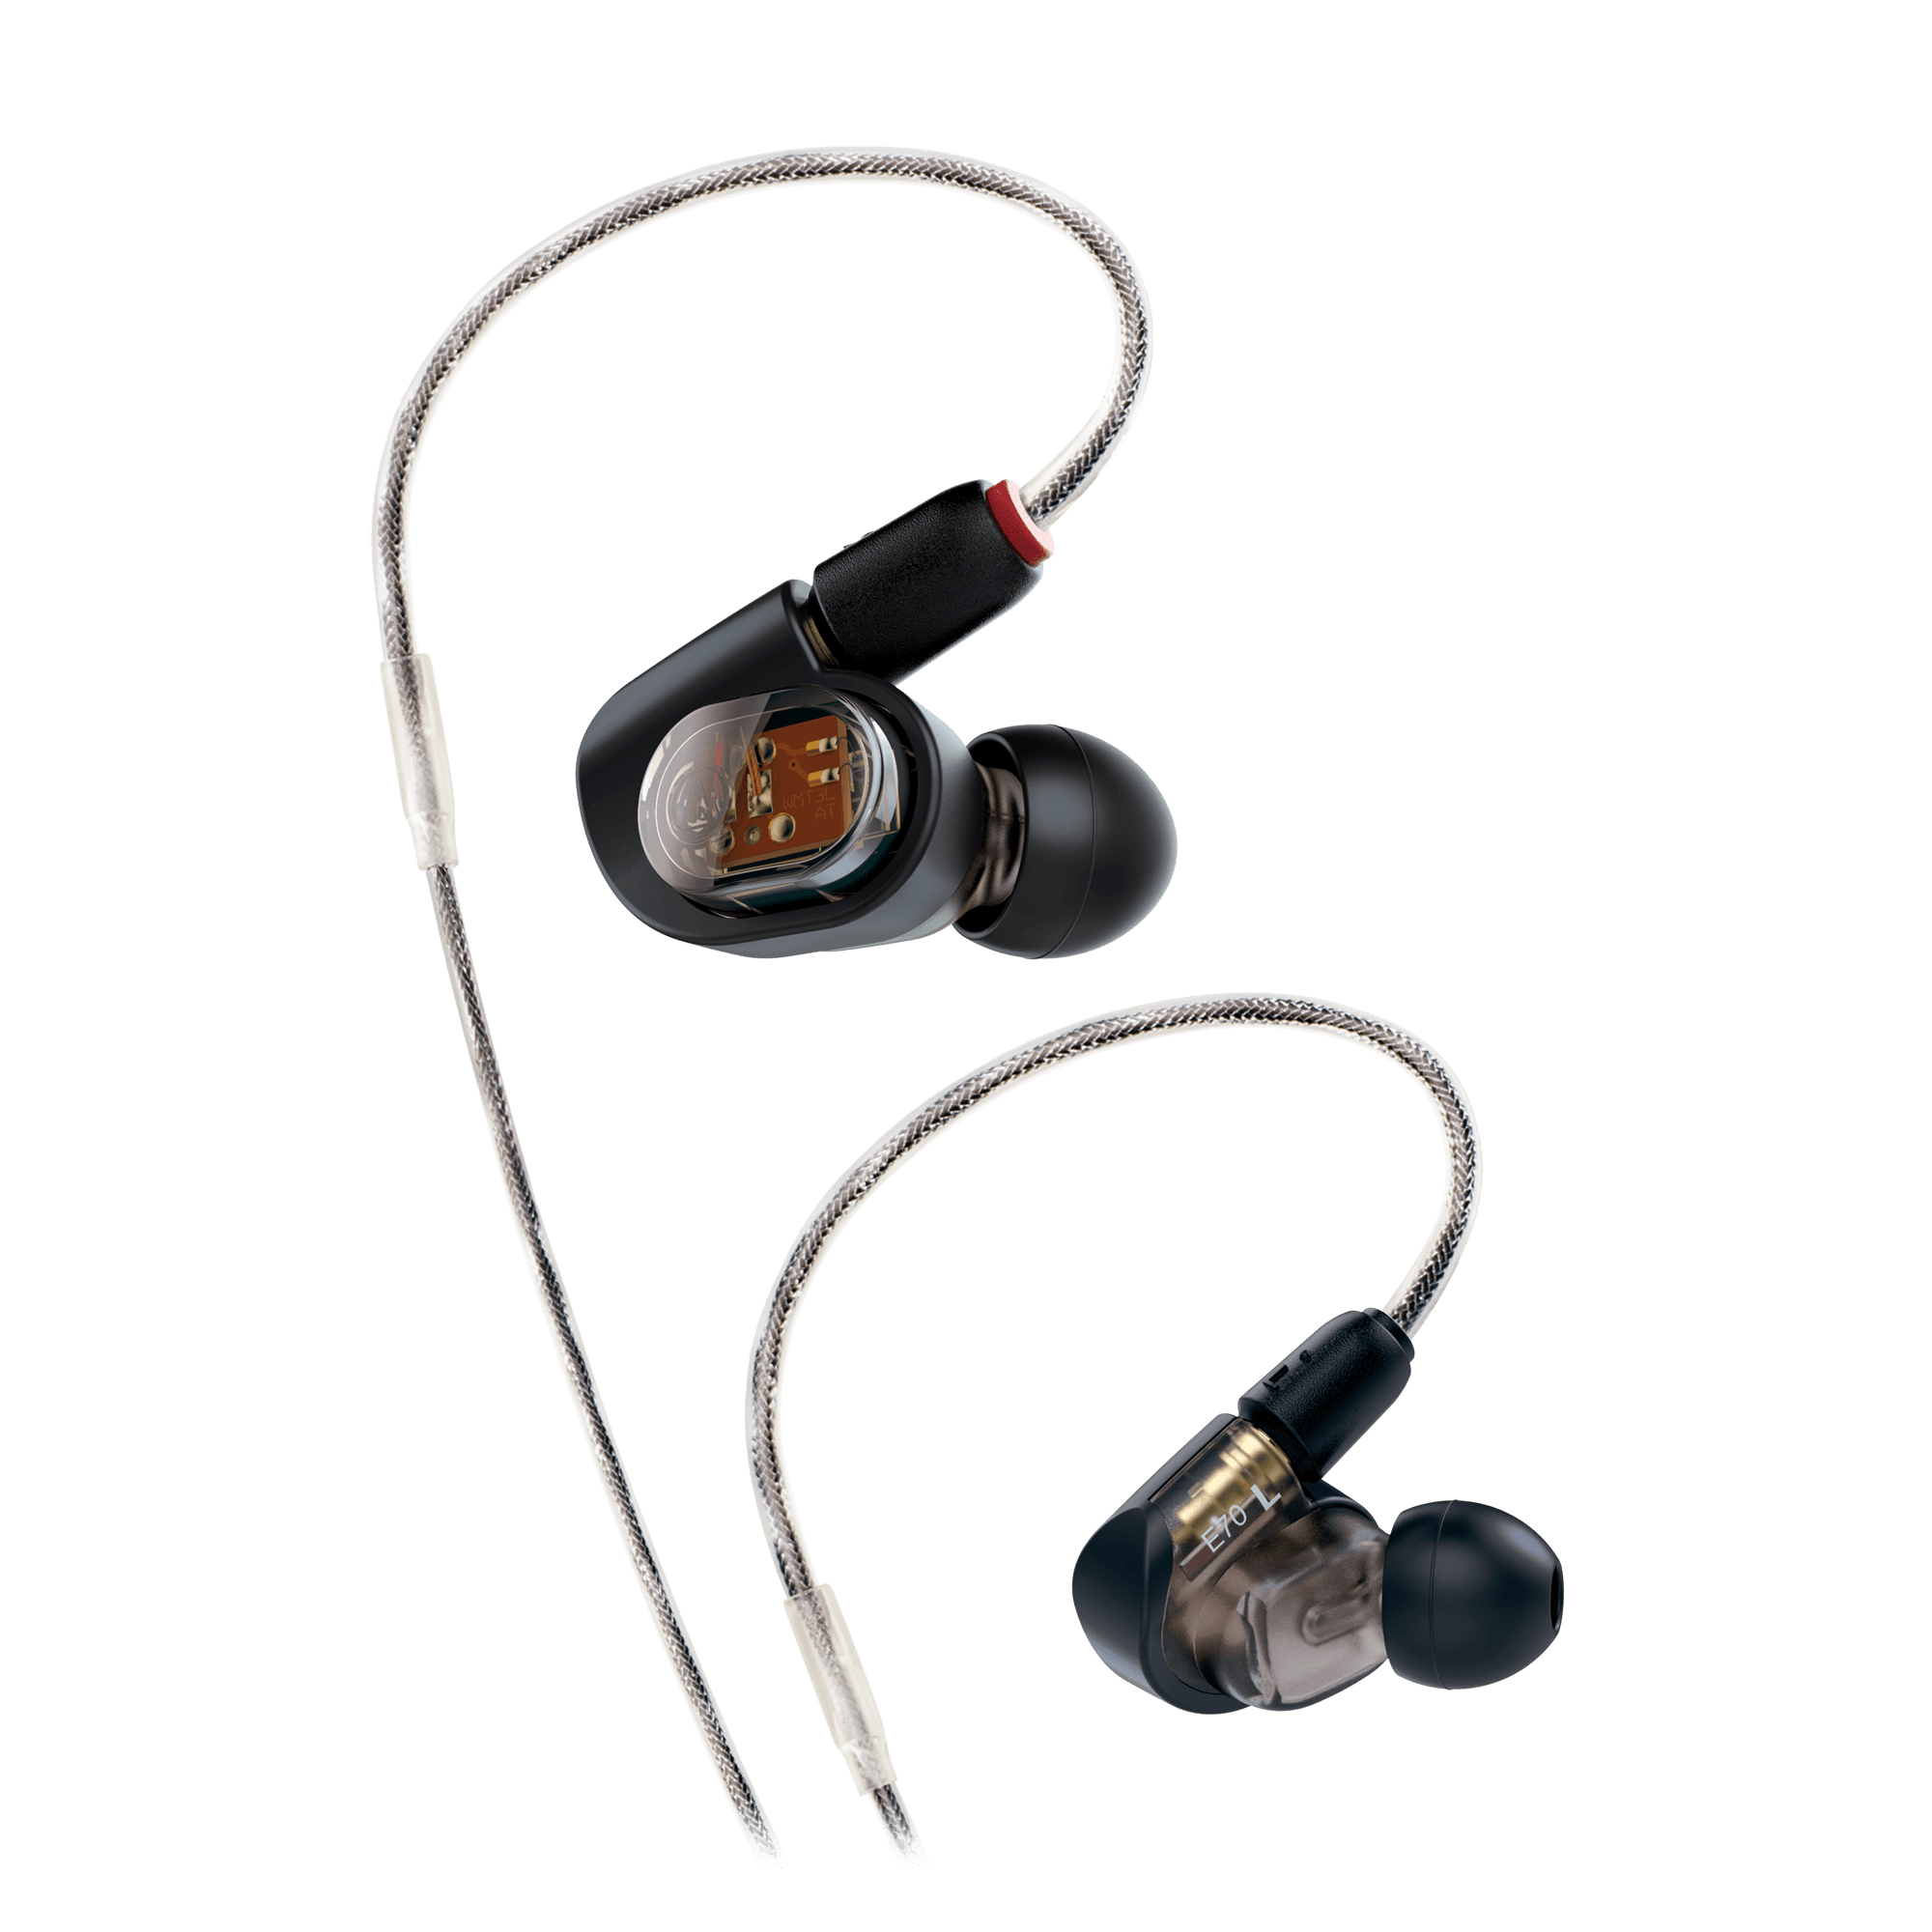 ATH-E70Professional In-Ear Monitor Headphones